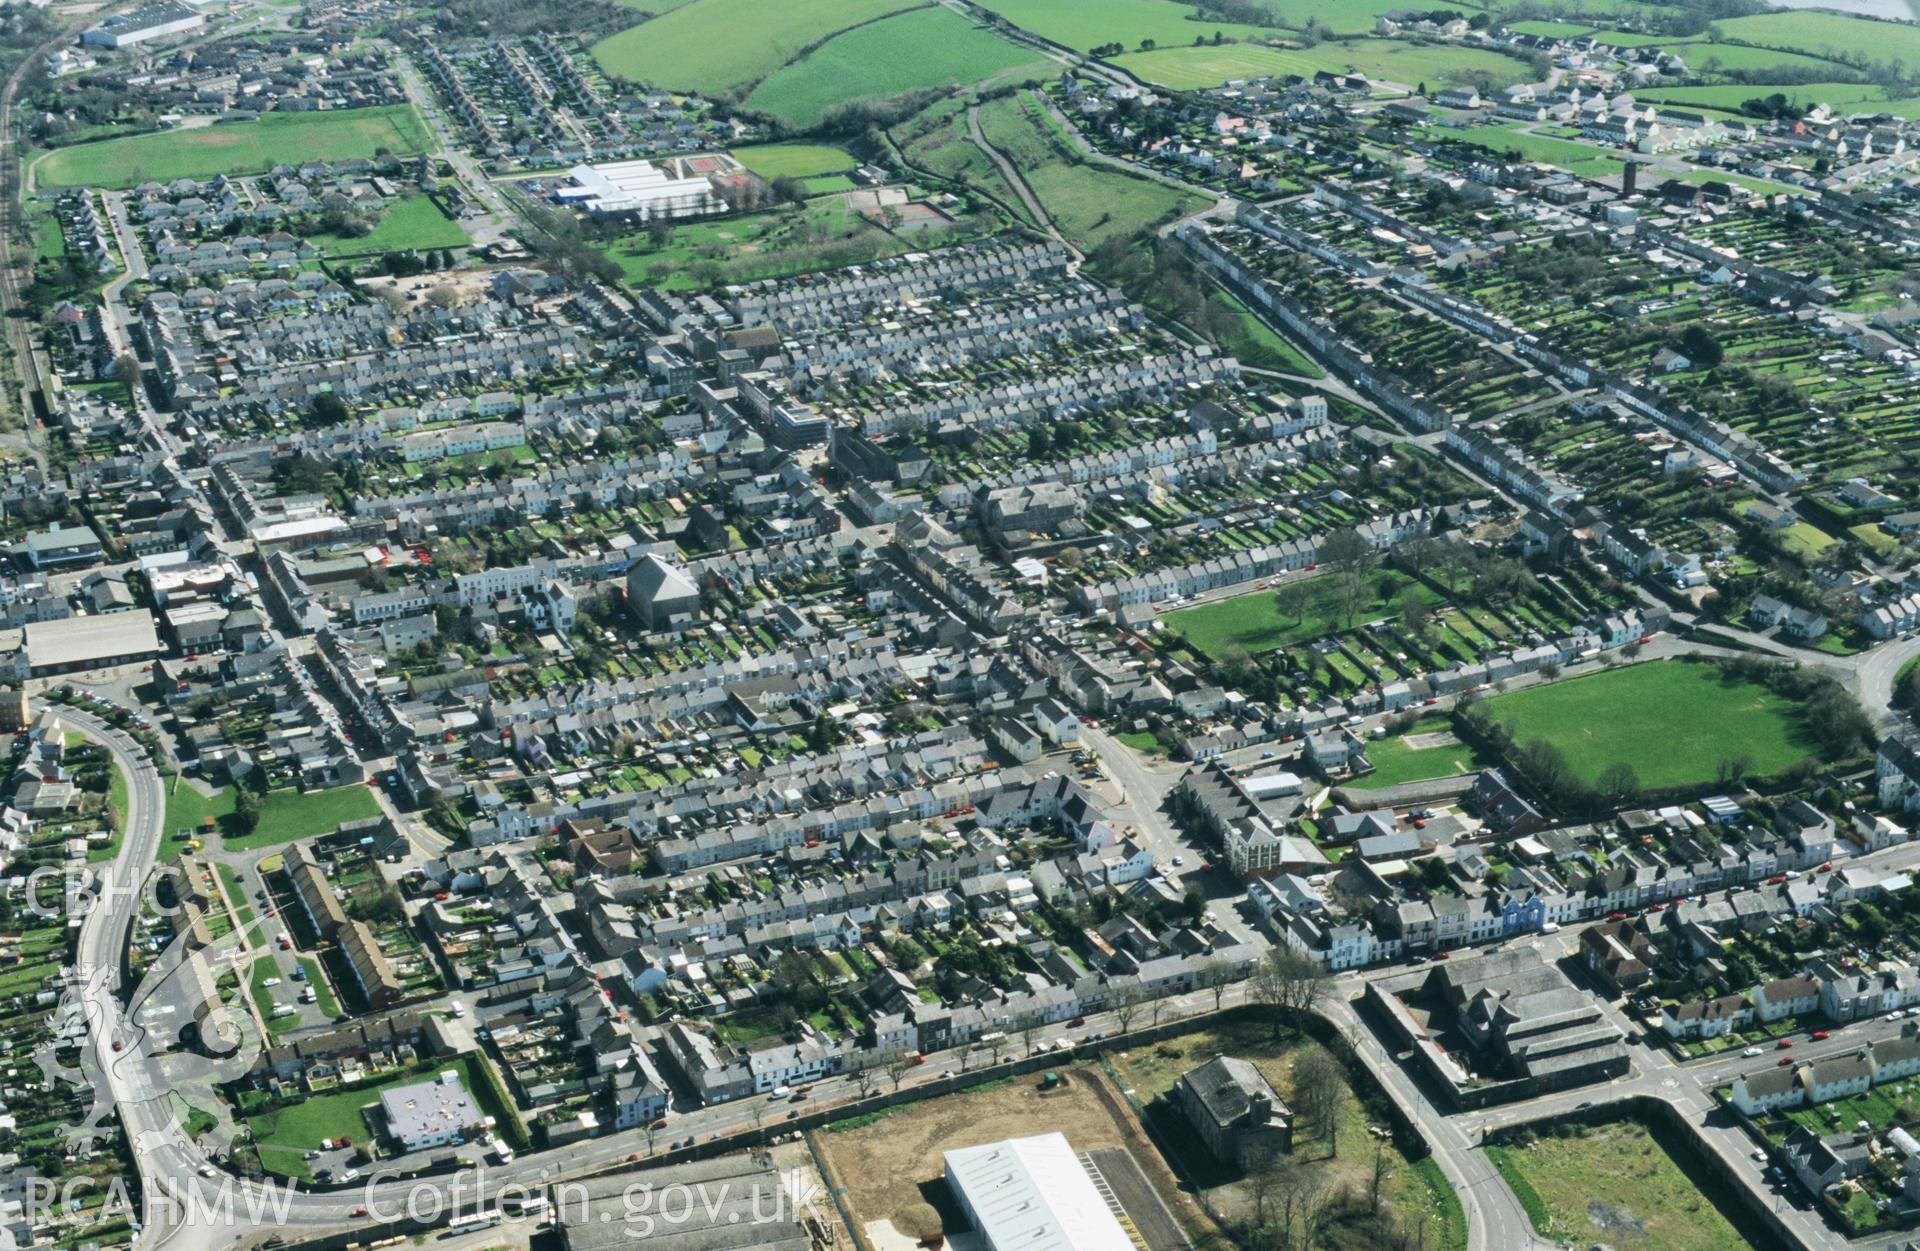 Slide of RCAHMW colour oblique aerial photograph of Pembroke Dock taken by Toby Driver, 2002.